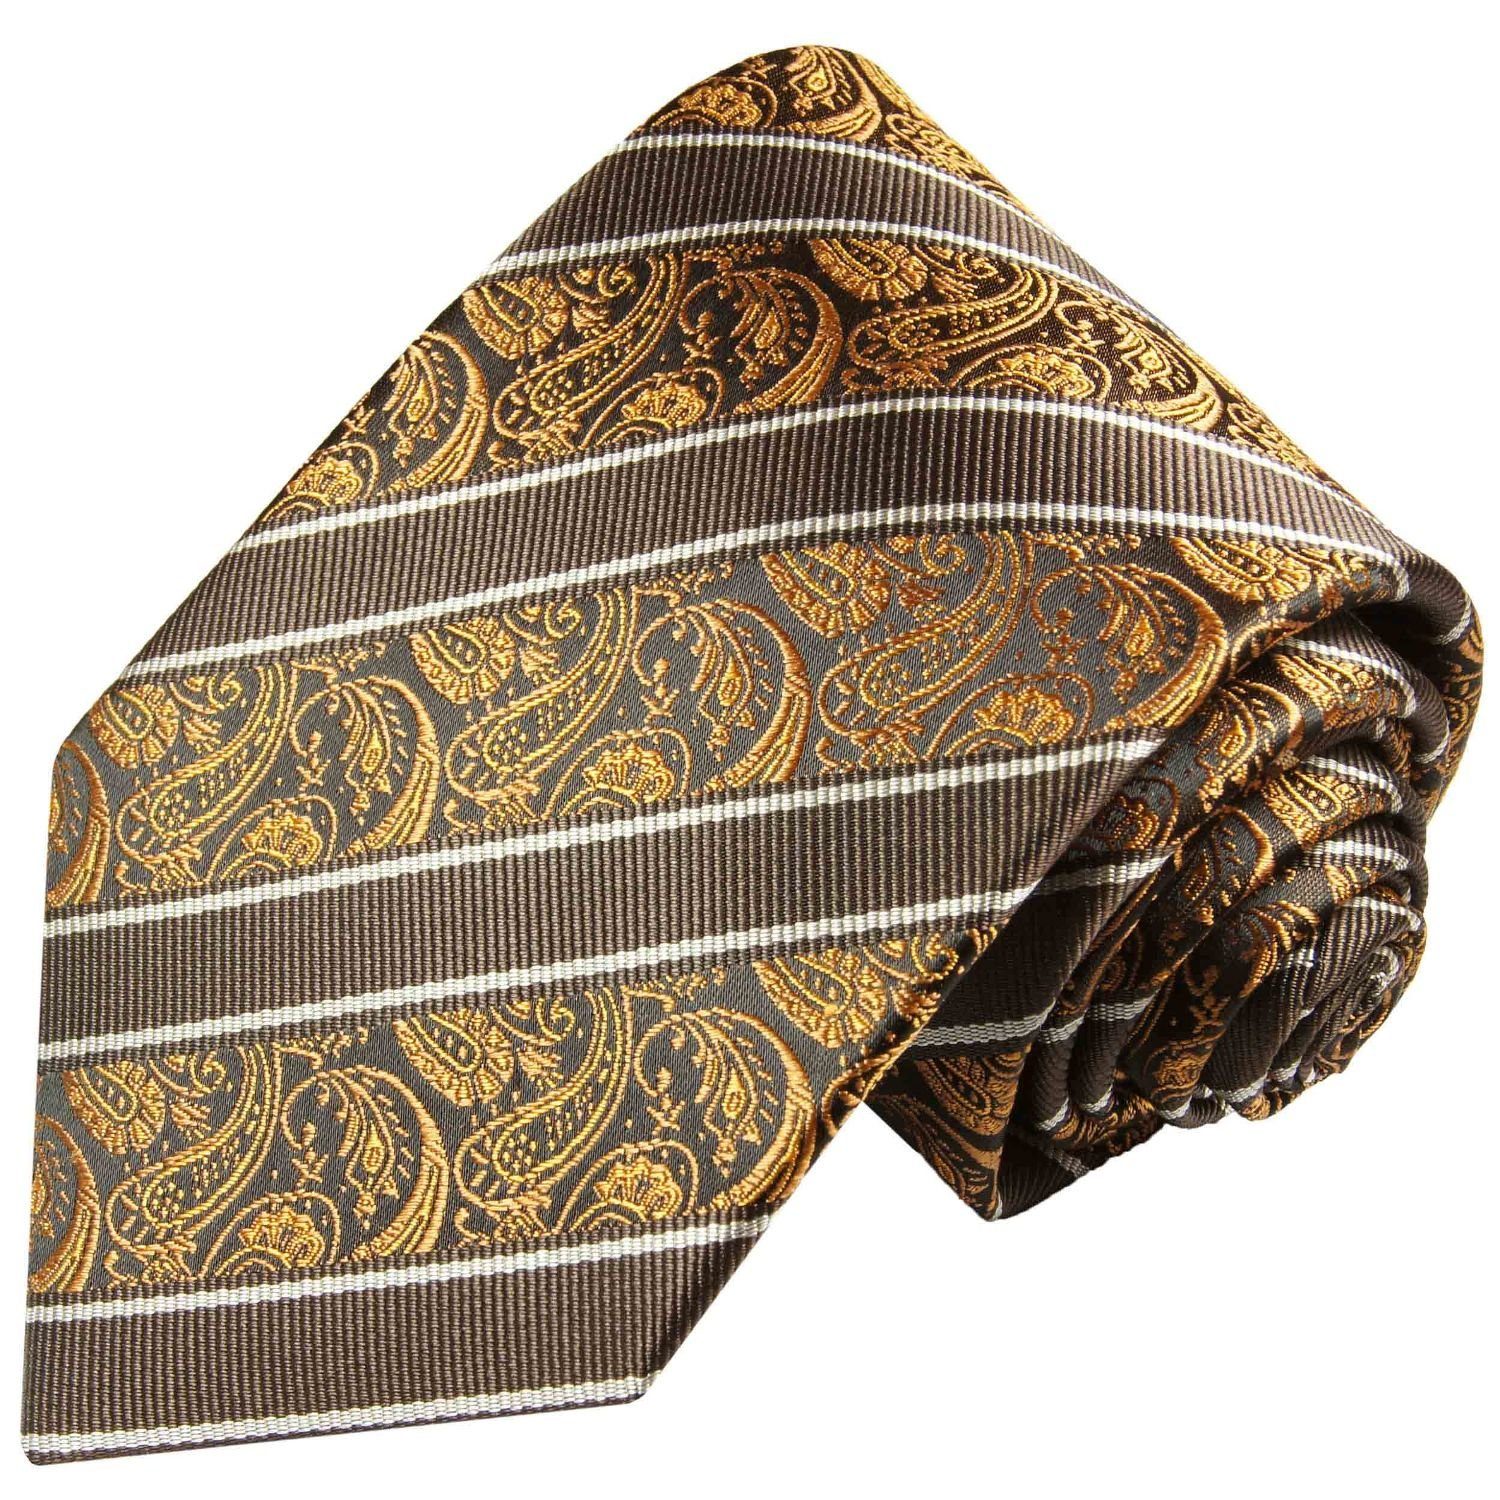 Seide Schmal Herren gestreift Krawatte Schlips paisley Paul 392 100% Elegante Seidenkrawatte Malone (6cm), braun